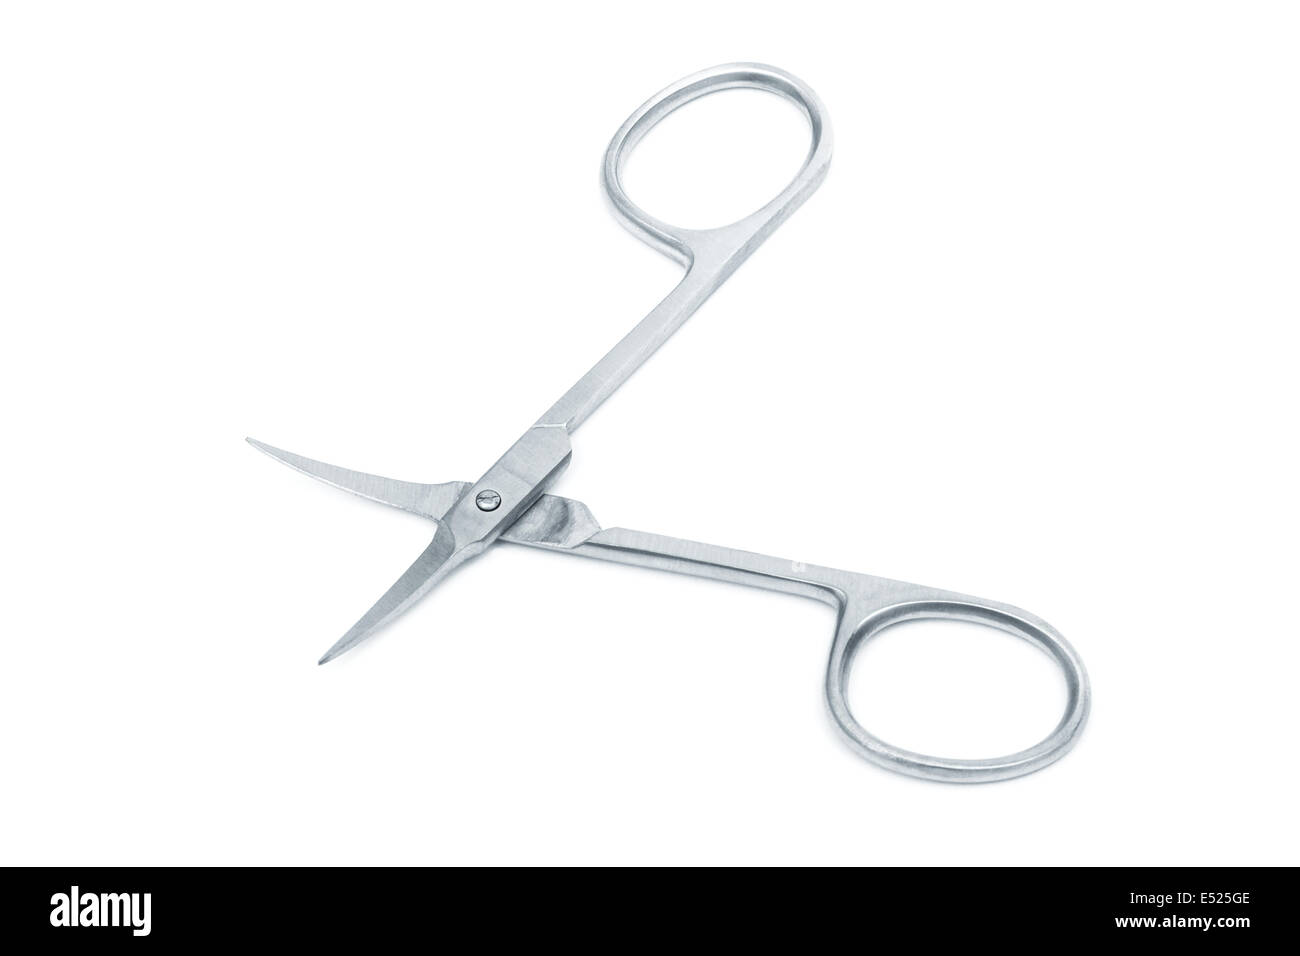 a manicure scissors Stock Photo